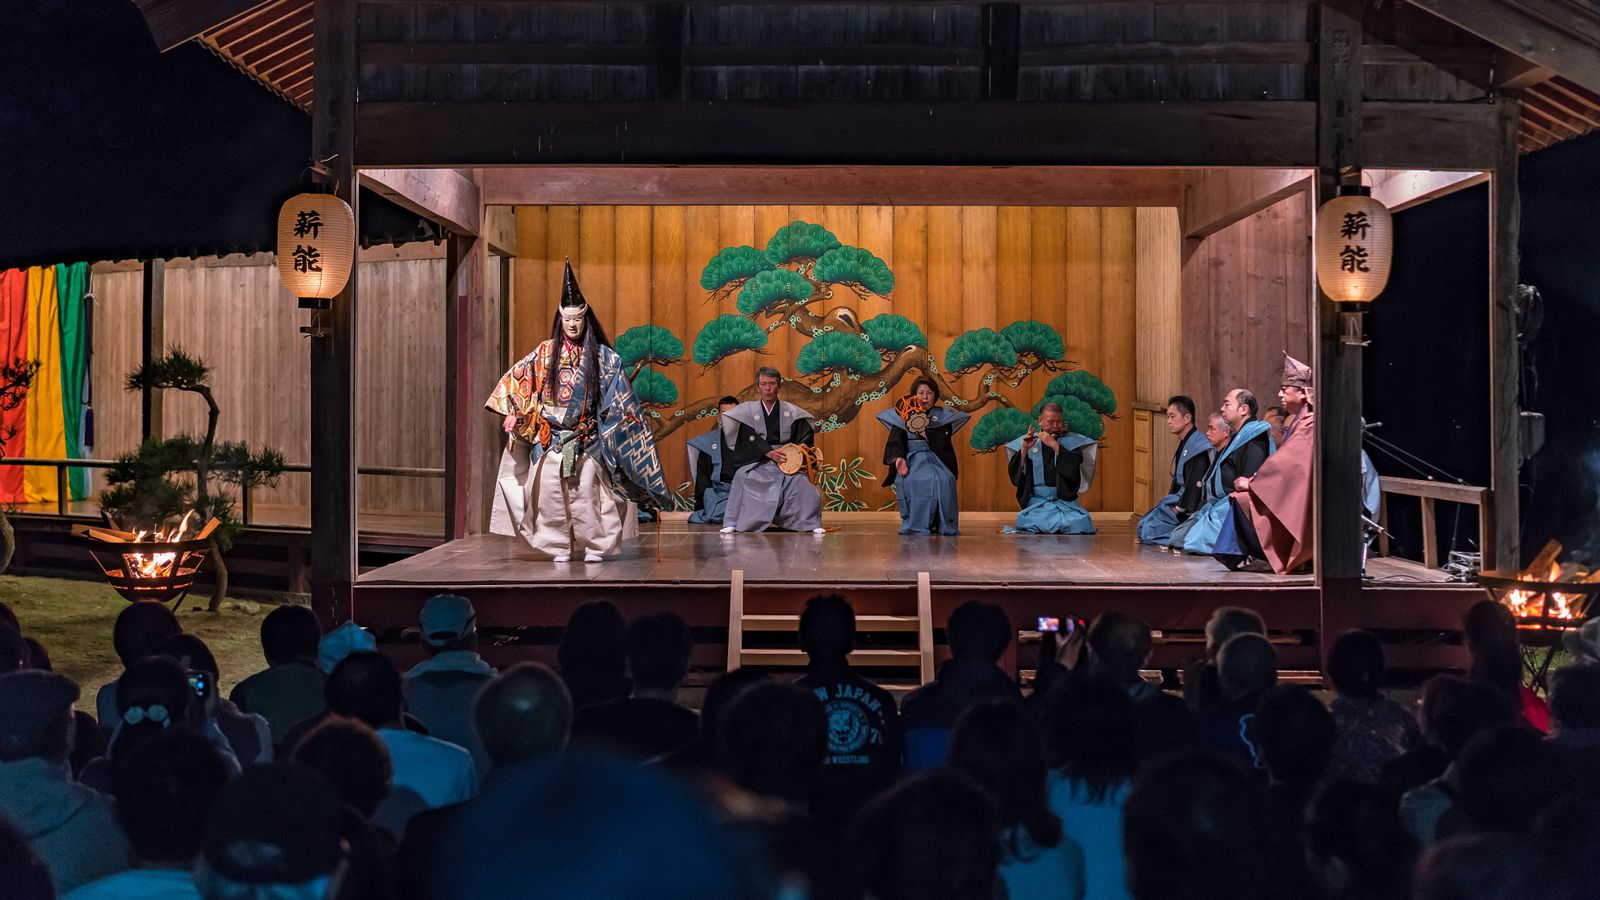 Photo: Noh theater performance on Sado Island, Japan. Credit: Yoshiyuki Ito, CC